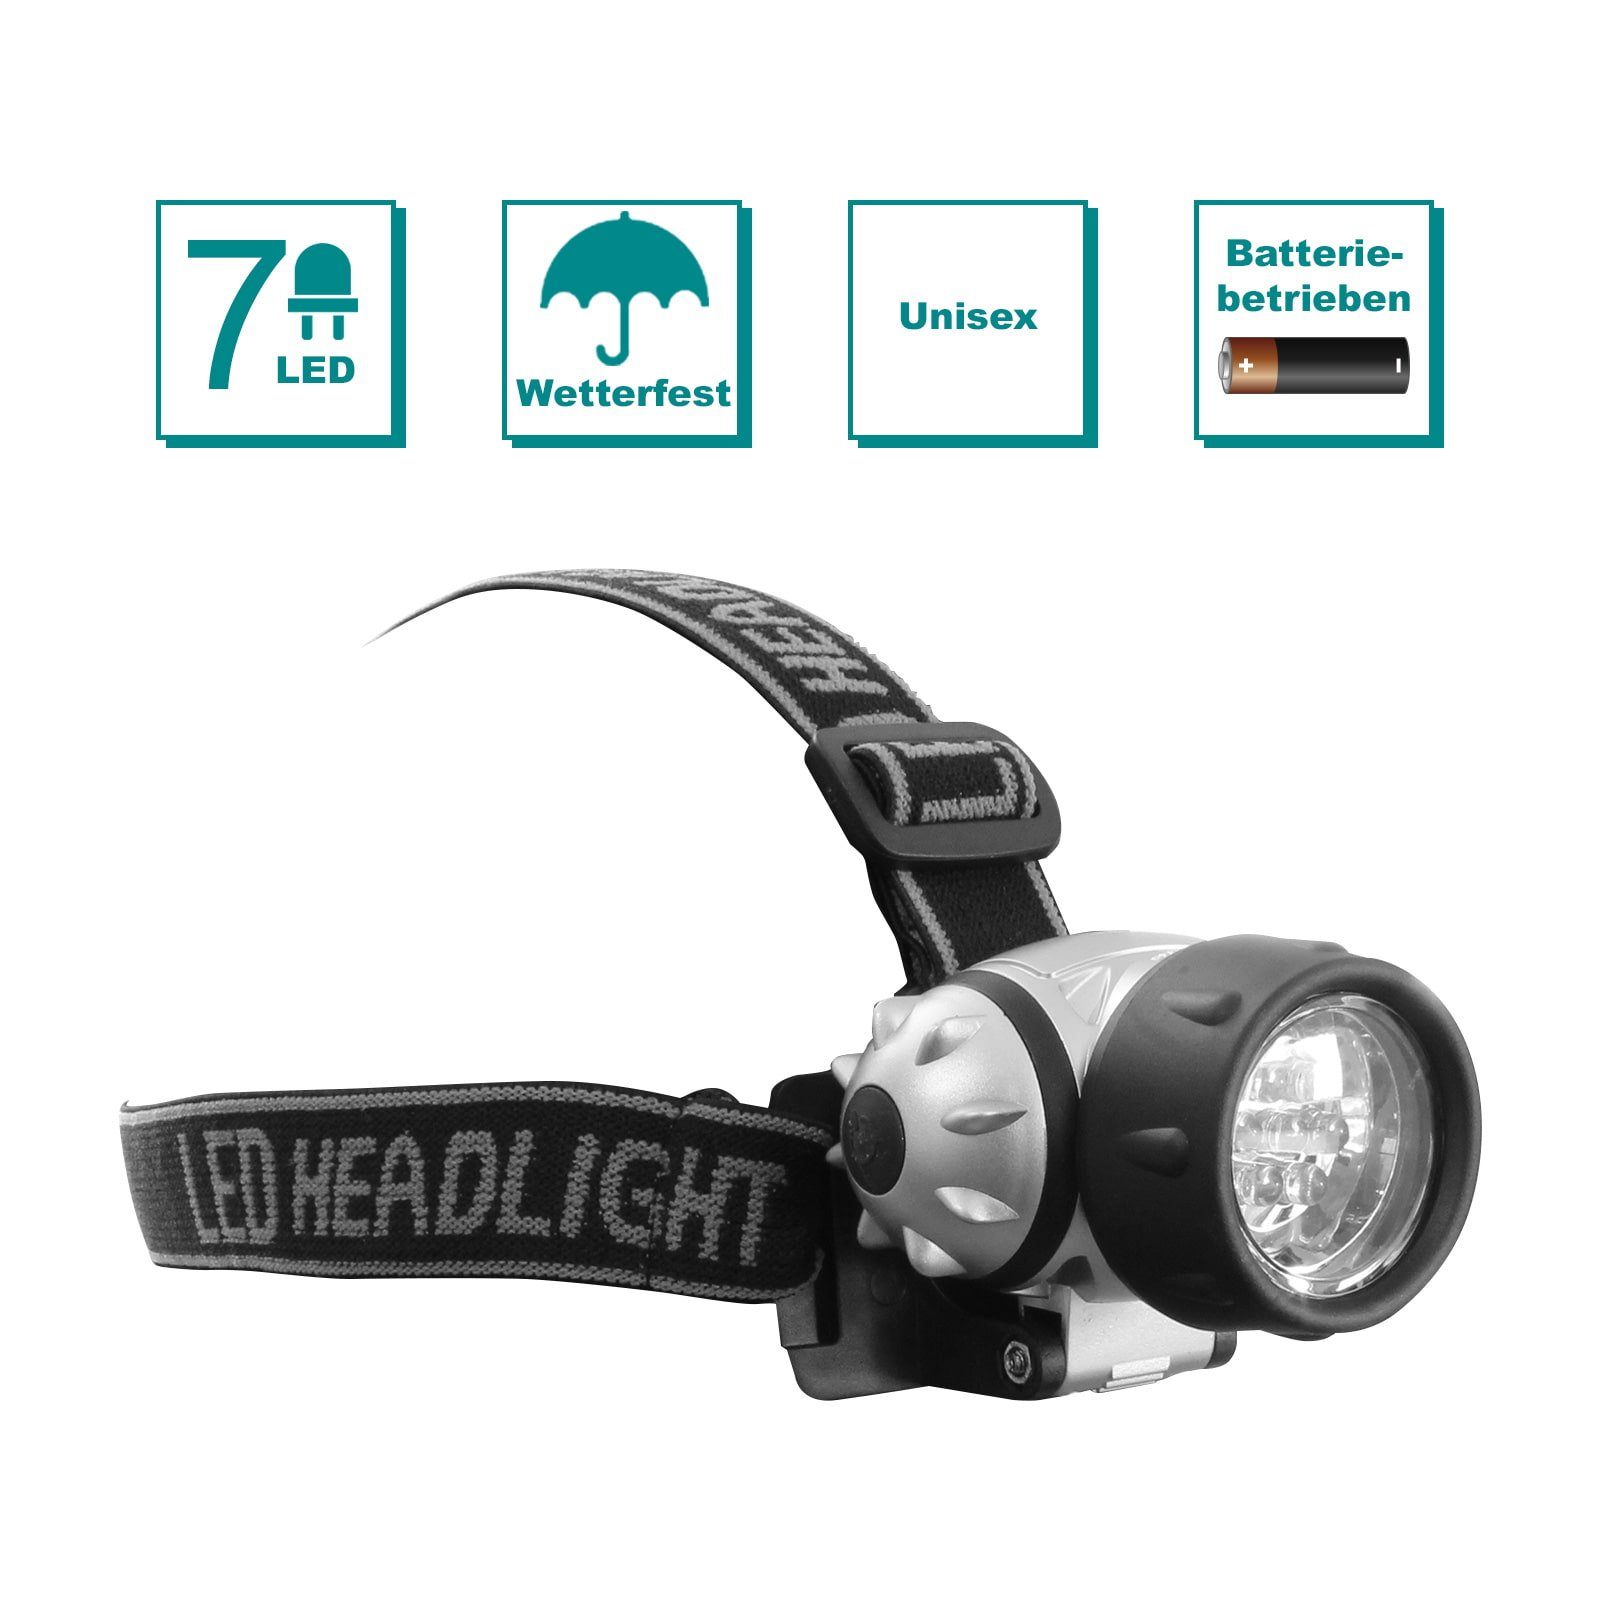 nach LEDs, 7 Stirnleuchte/Kopflampe Stirnlampe LED über Wasserfest IP44 LED mit Leuchtmodi, 3 EAXUS Dimmbar